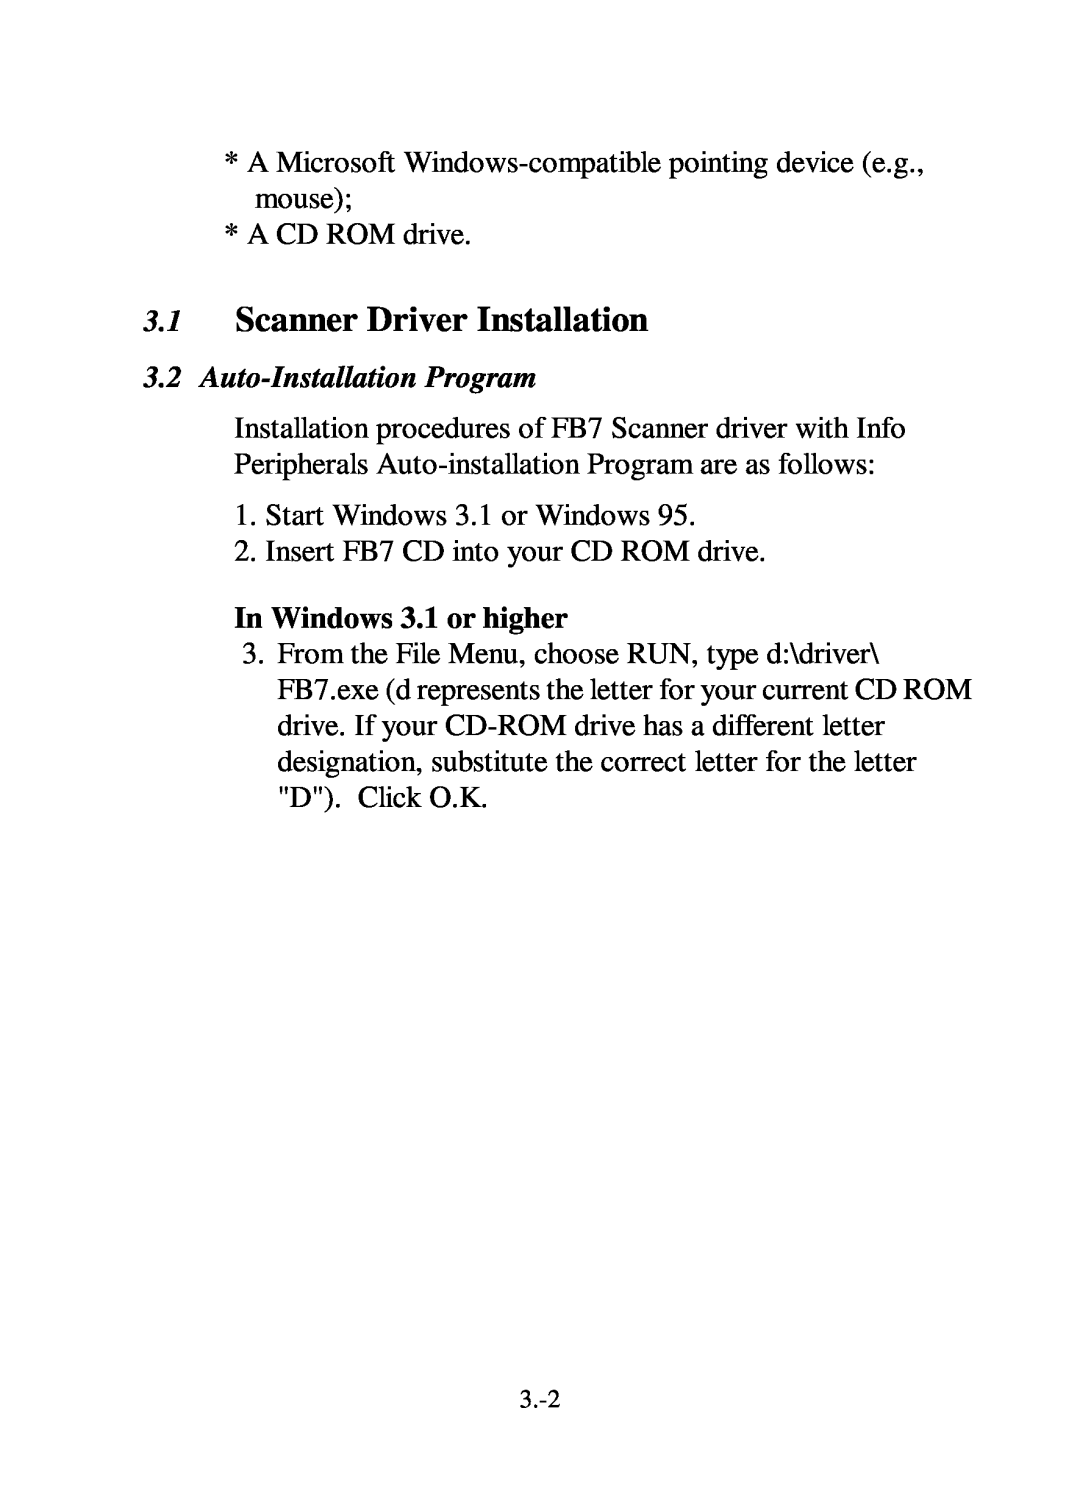 IBM Ricoh FB735 user manual Scanner Driver Installation, Auto-Installation Program, In Windows 3.1 or higher 